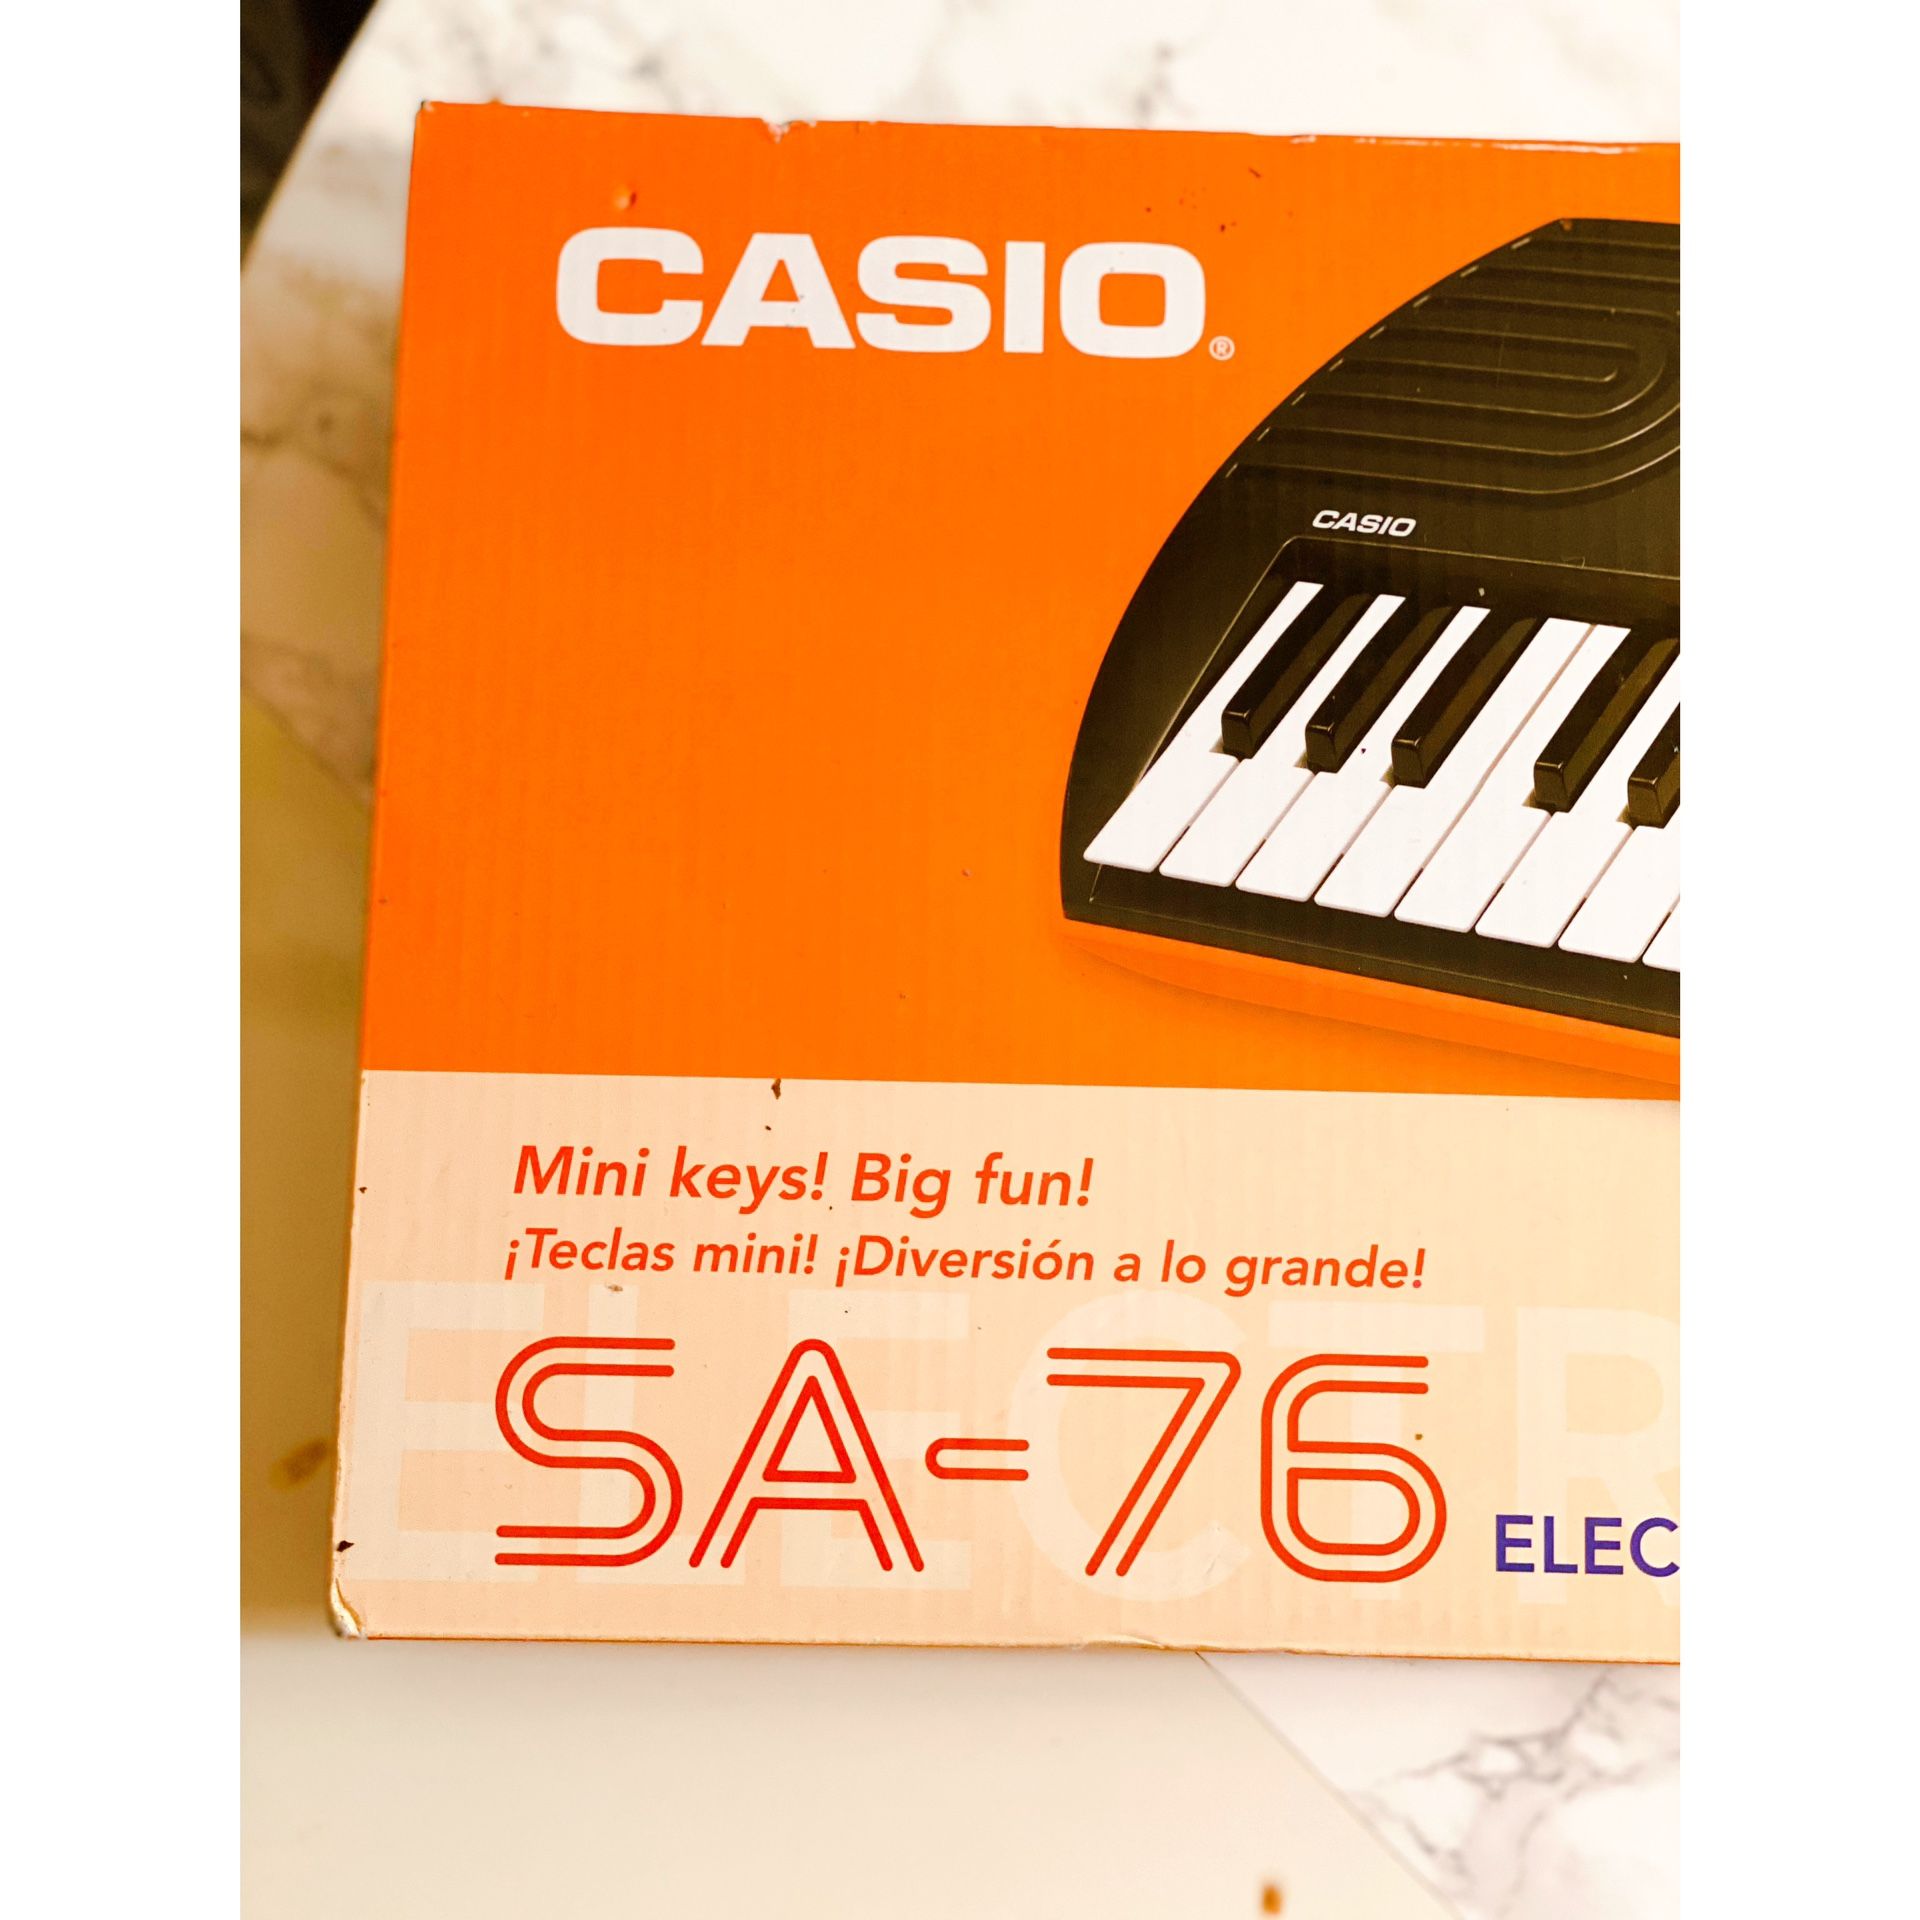 Casio SA-76 Electronic Keyboard Arranger